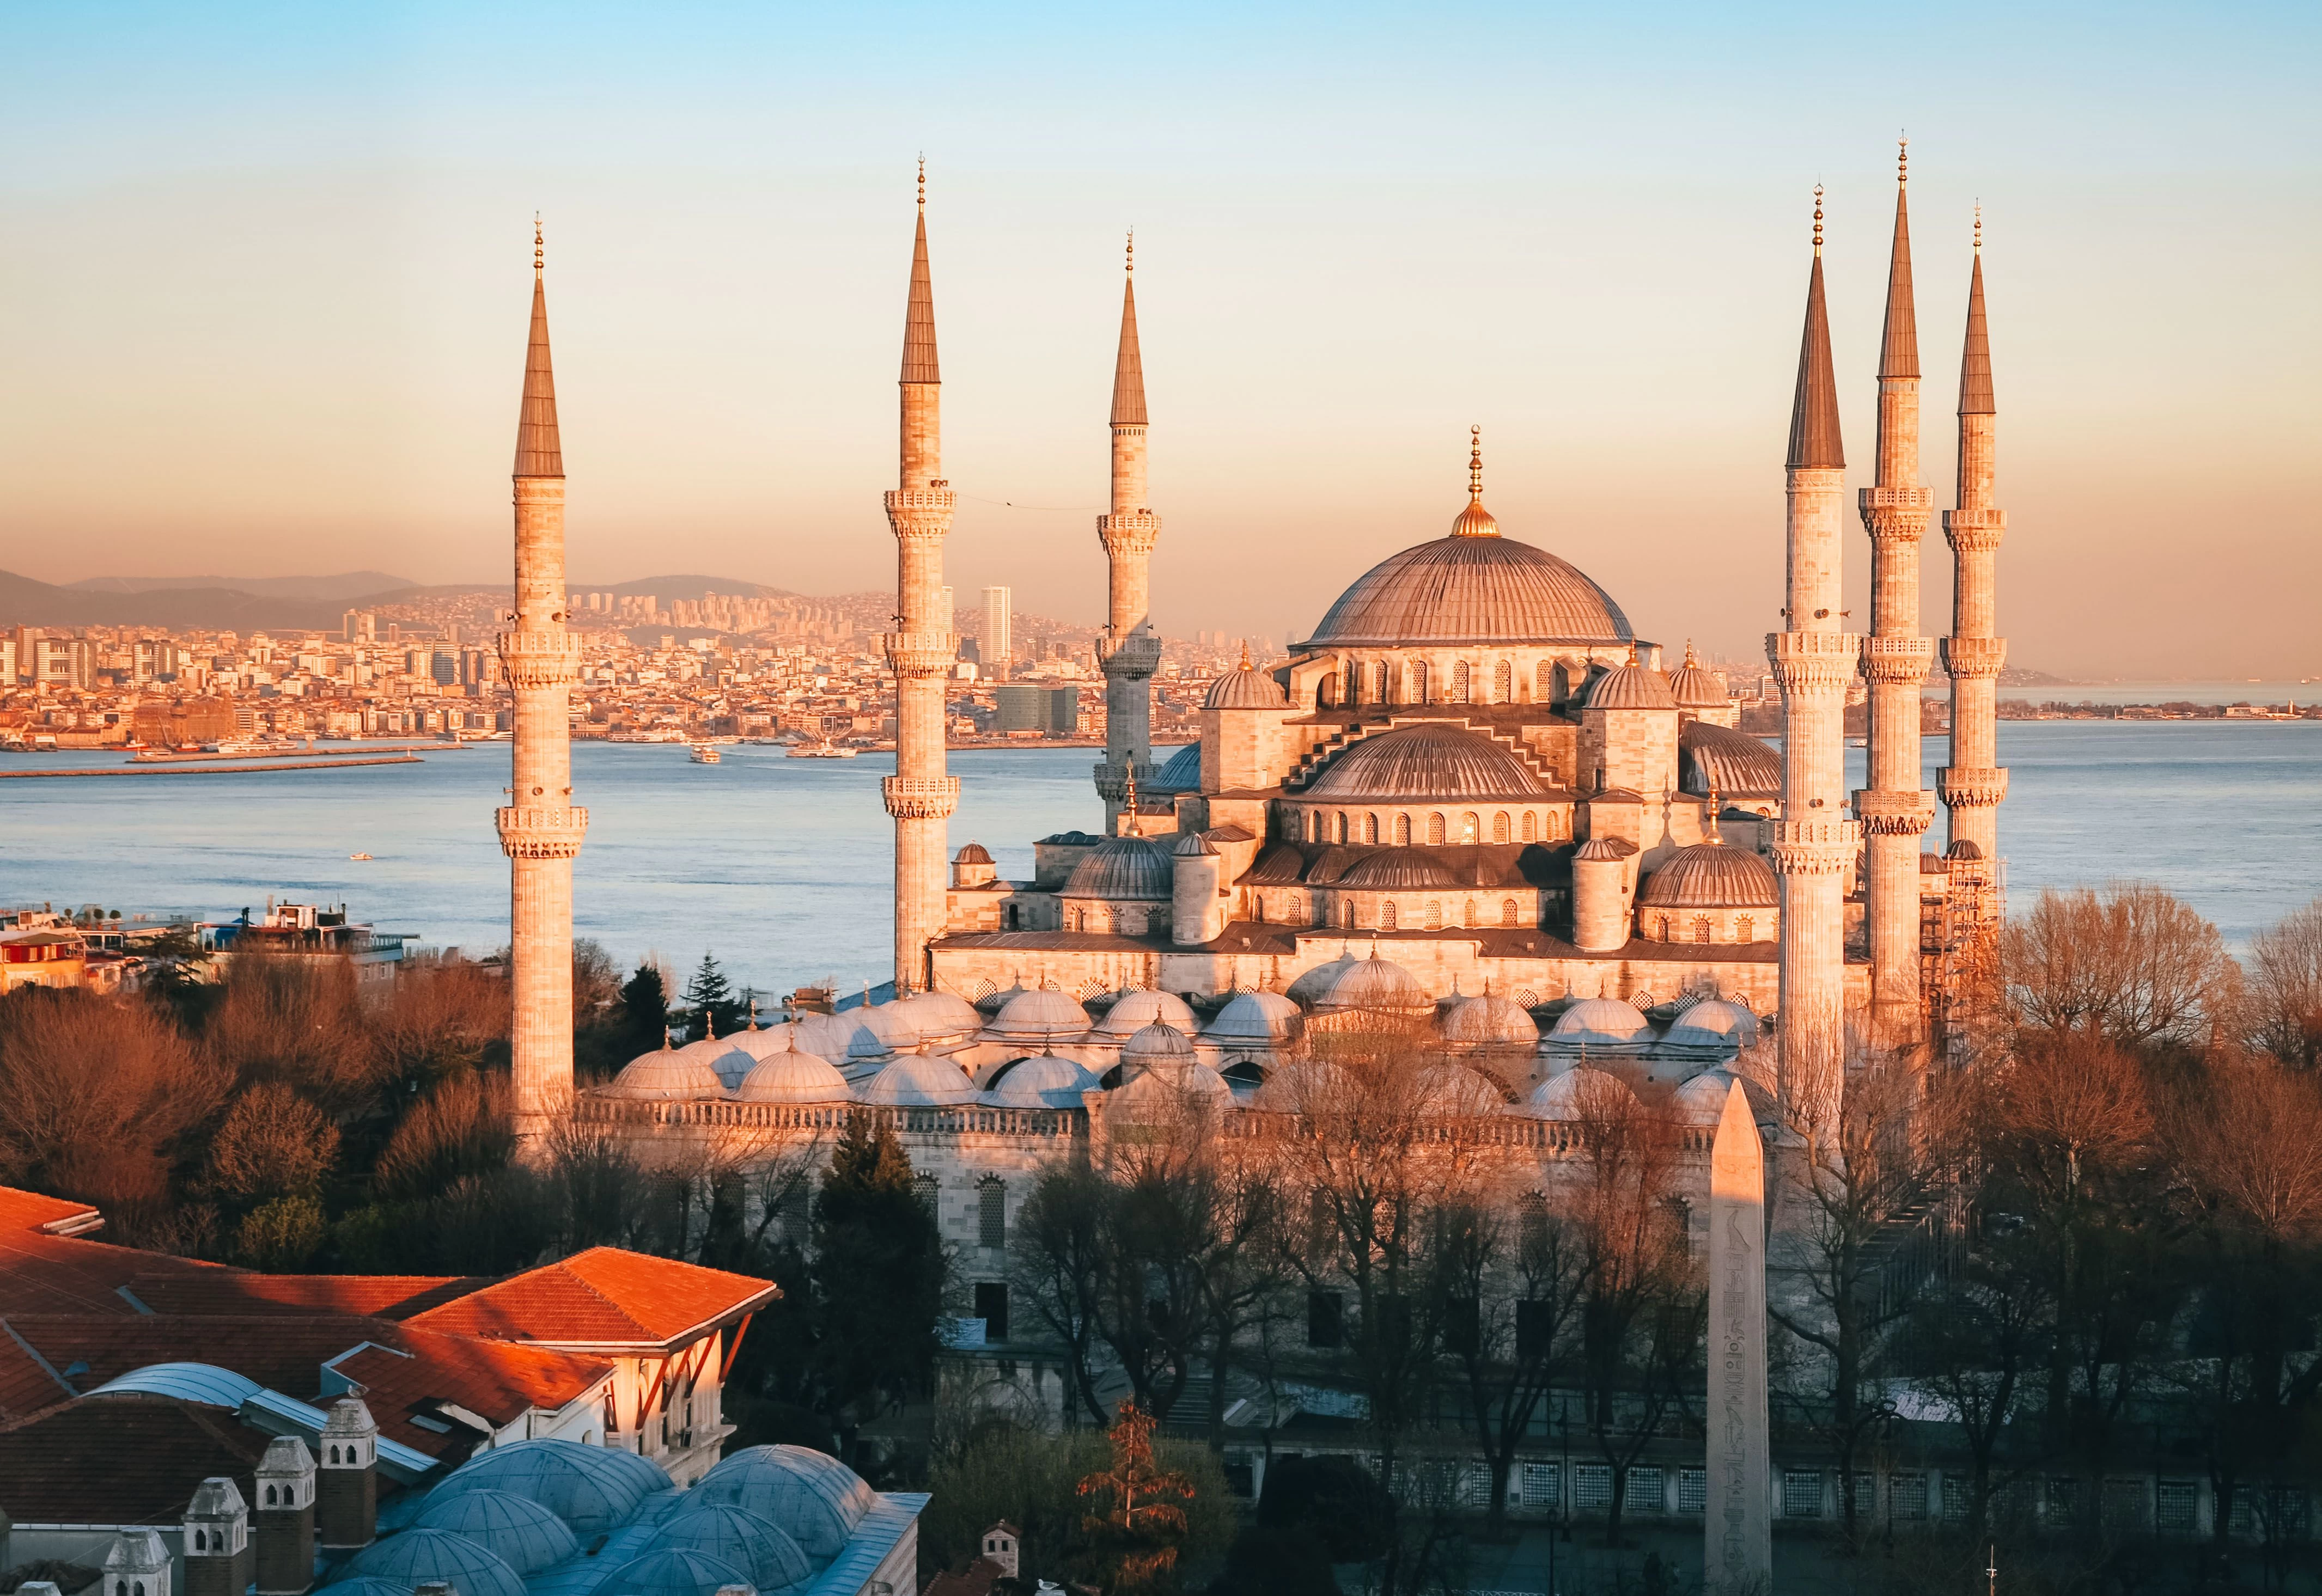 Descubre la maravillosa ciudad de Estambul